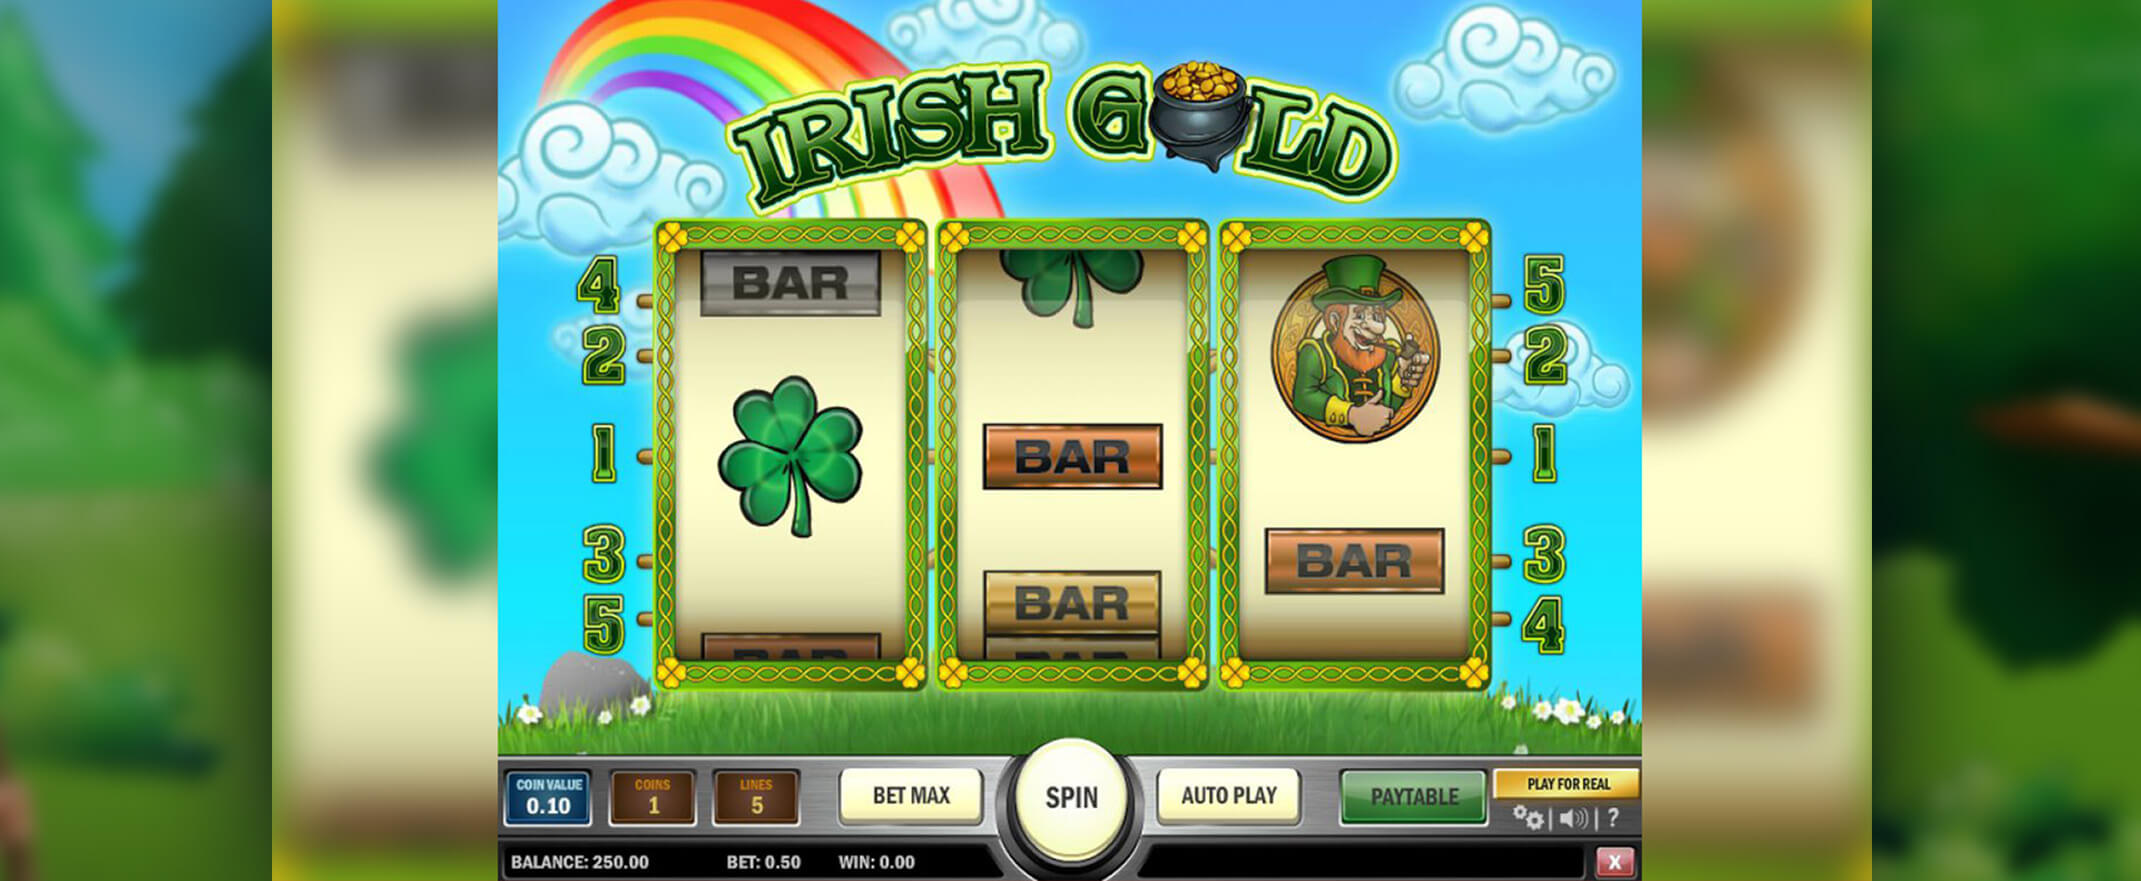 Irish Gold peliautomaatti